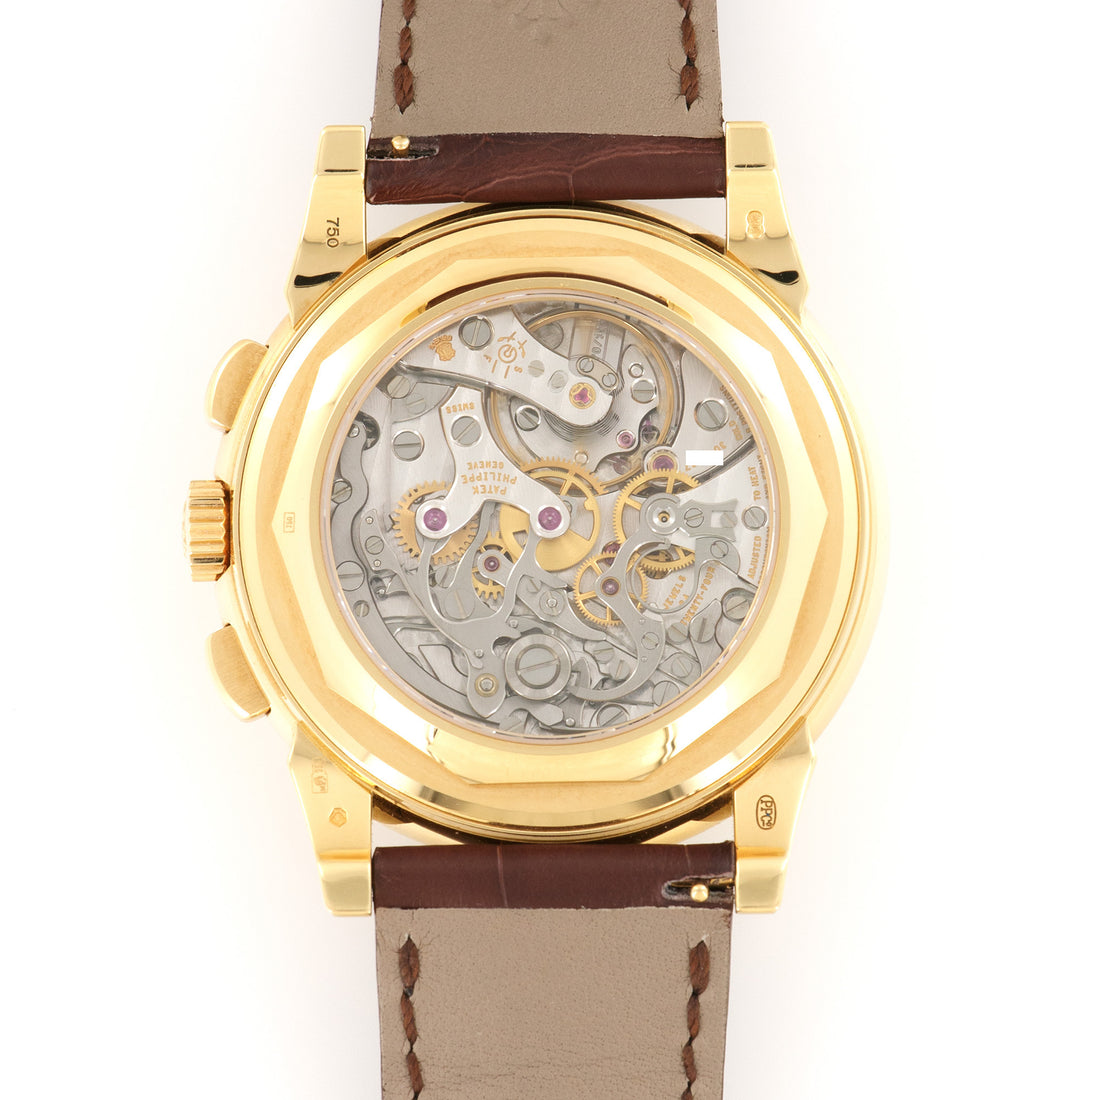 Patek Philippe Yellow Gold Perpetual Calendar Chrono Watch Ref. 5970